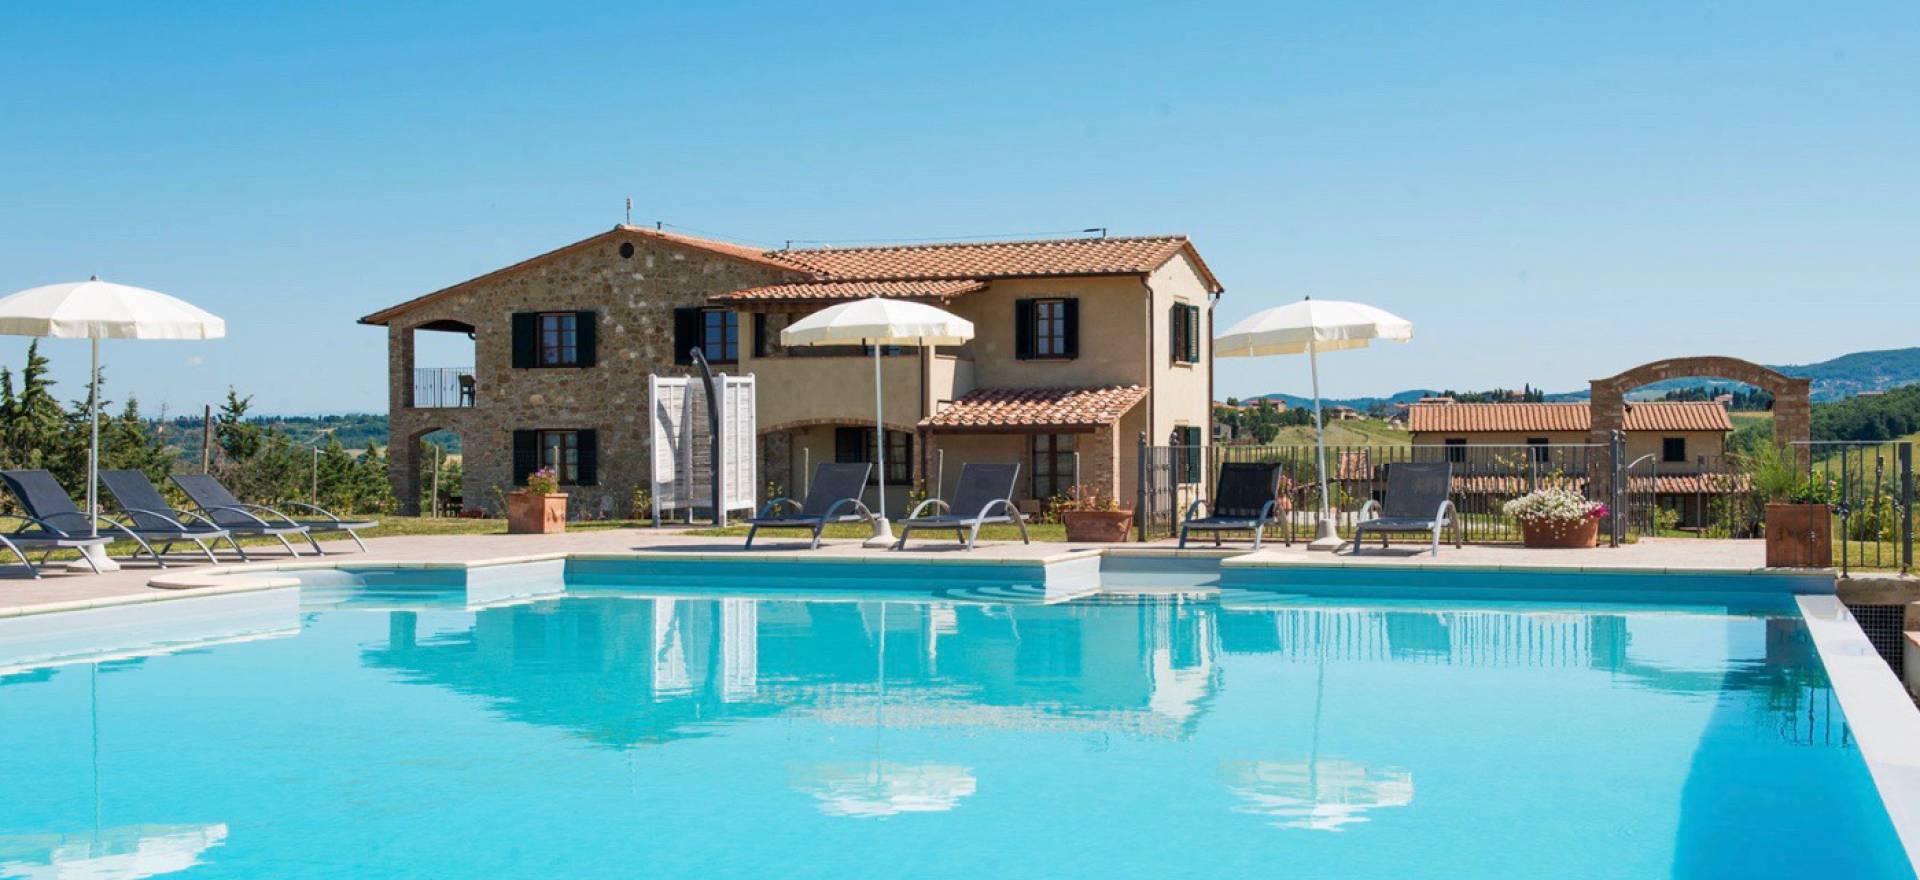 Familie-vriendelijke agriturismo Toscane met mooi zwembad